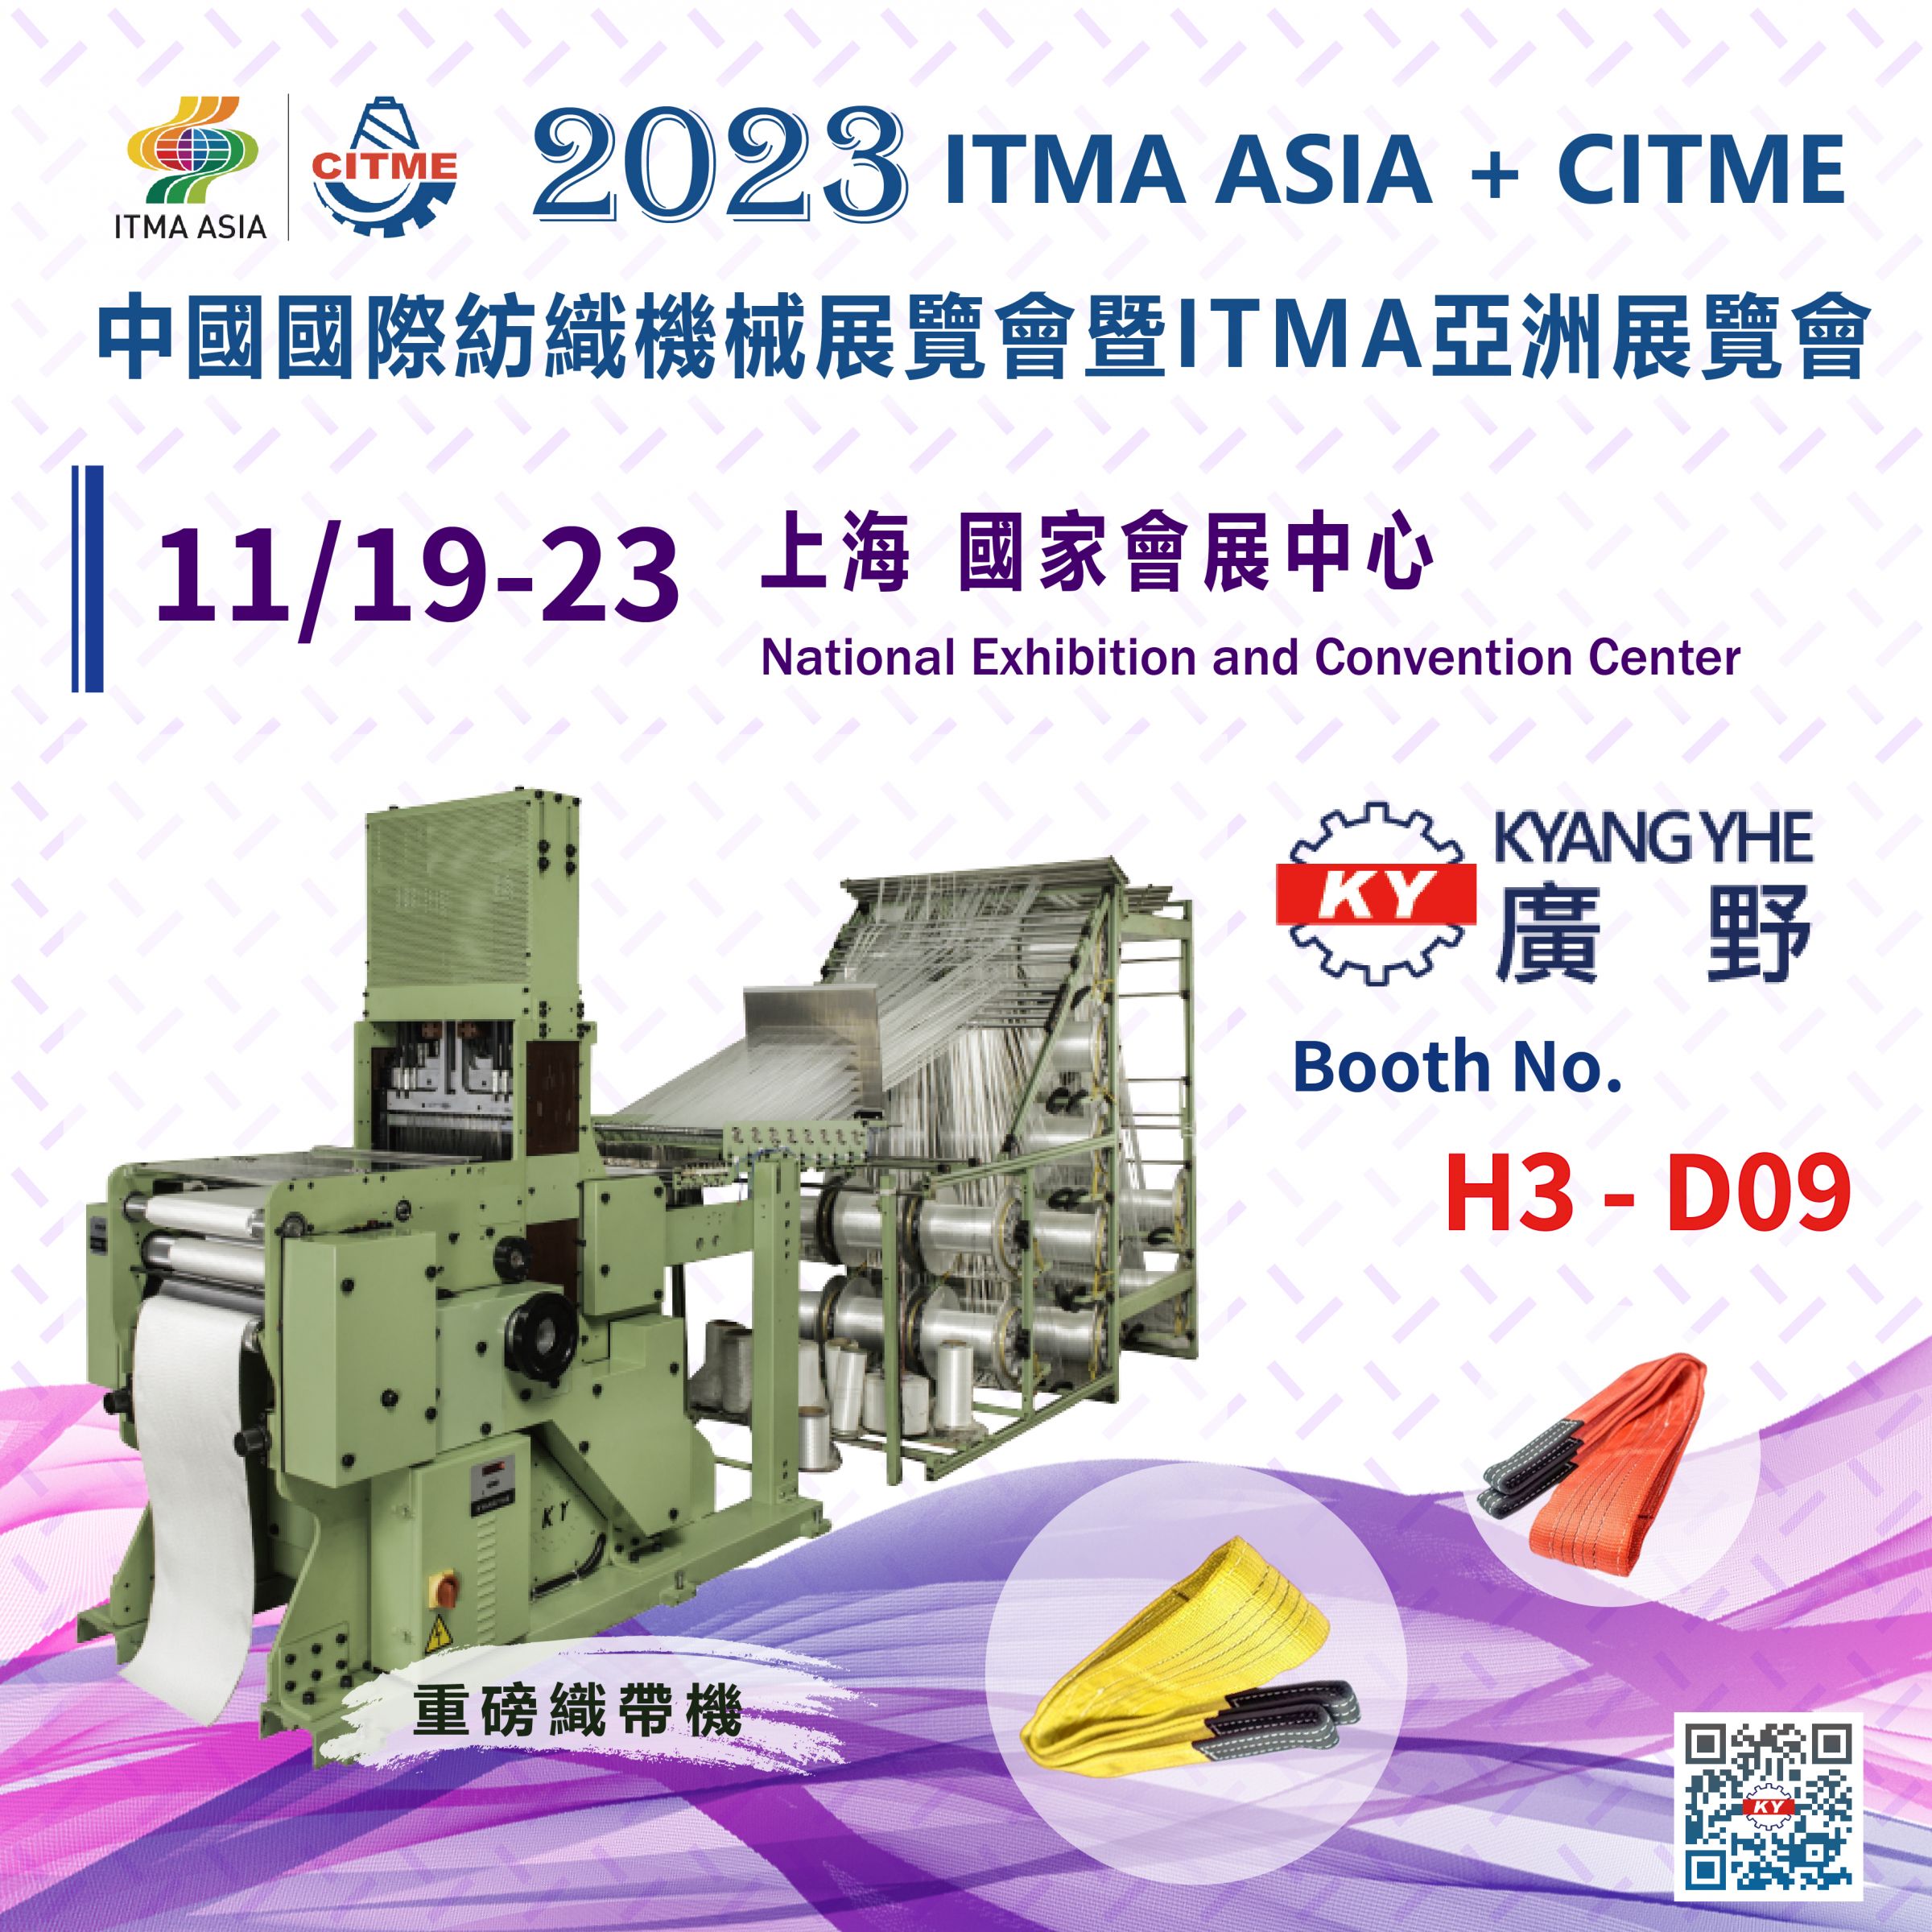 2023 ITMA ASIA + CITME at Shanghai, China